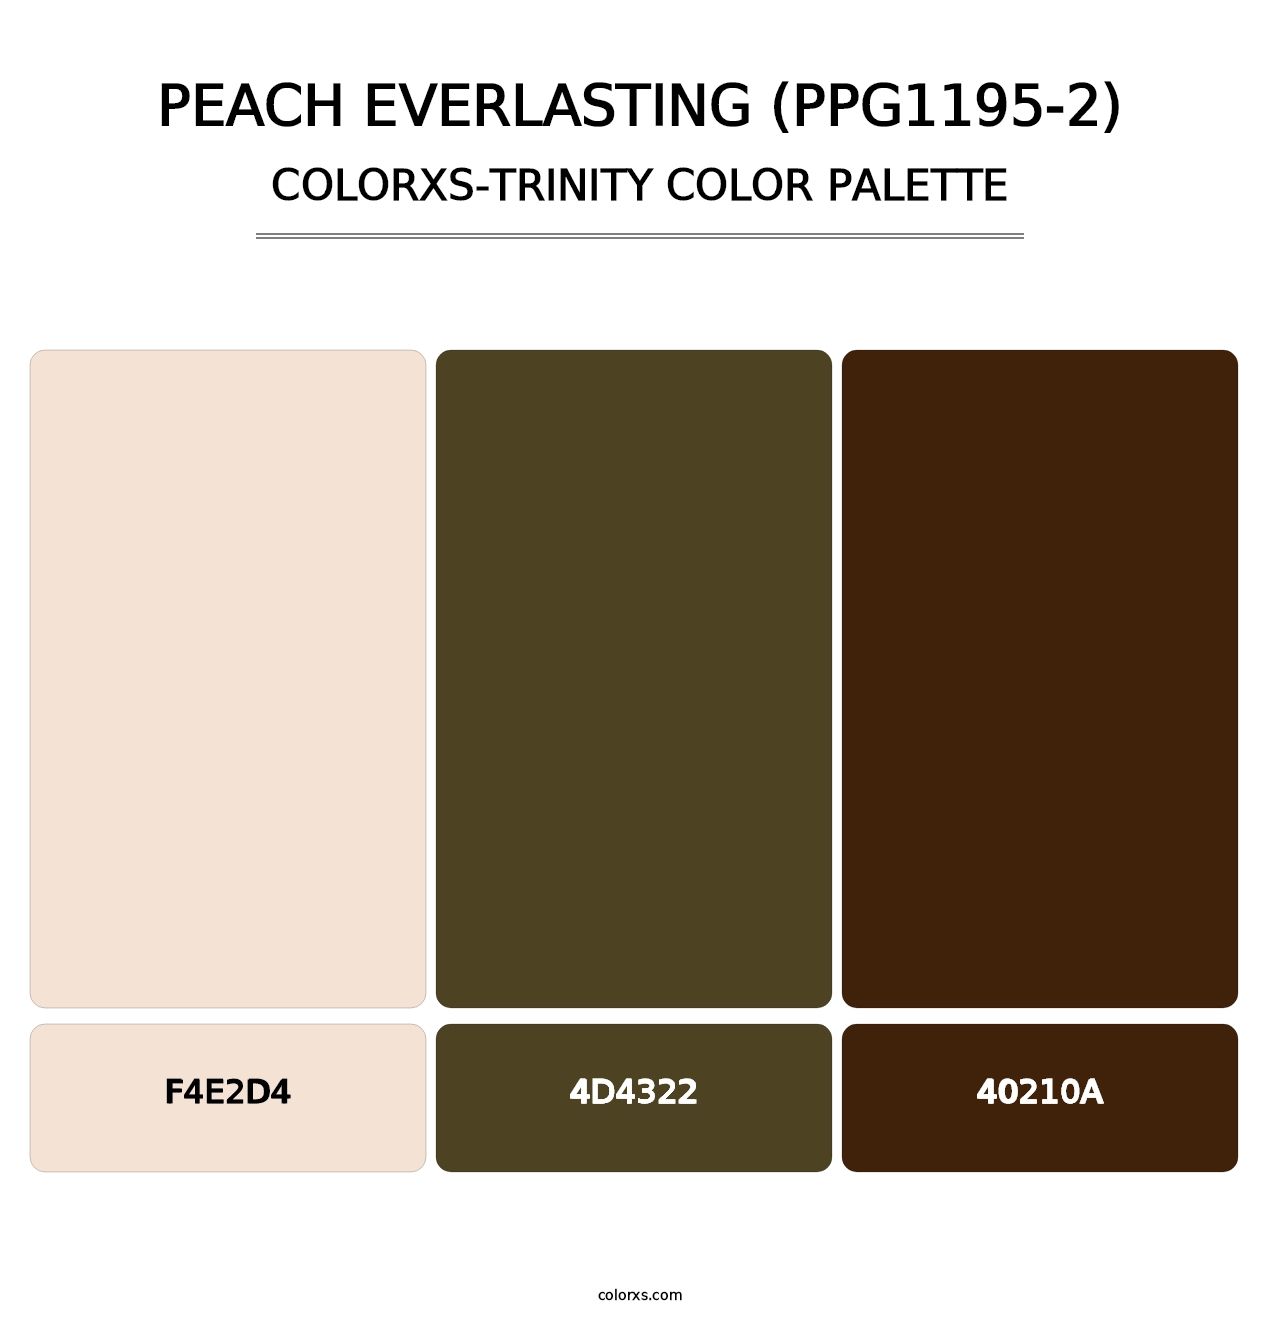 Peach Everlasting (PPG1195-2) - Colorxs Trinity Palette